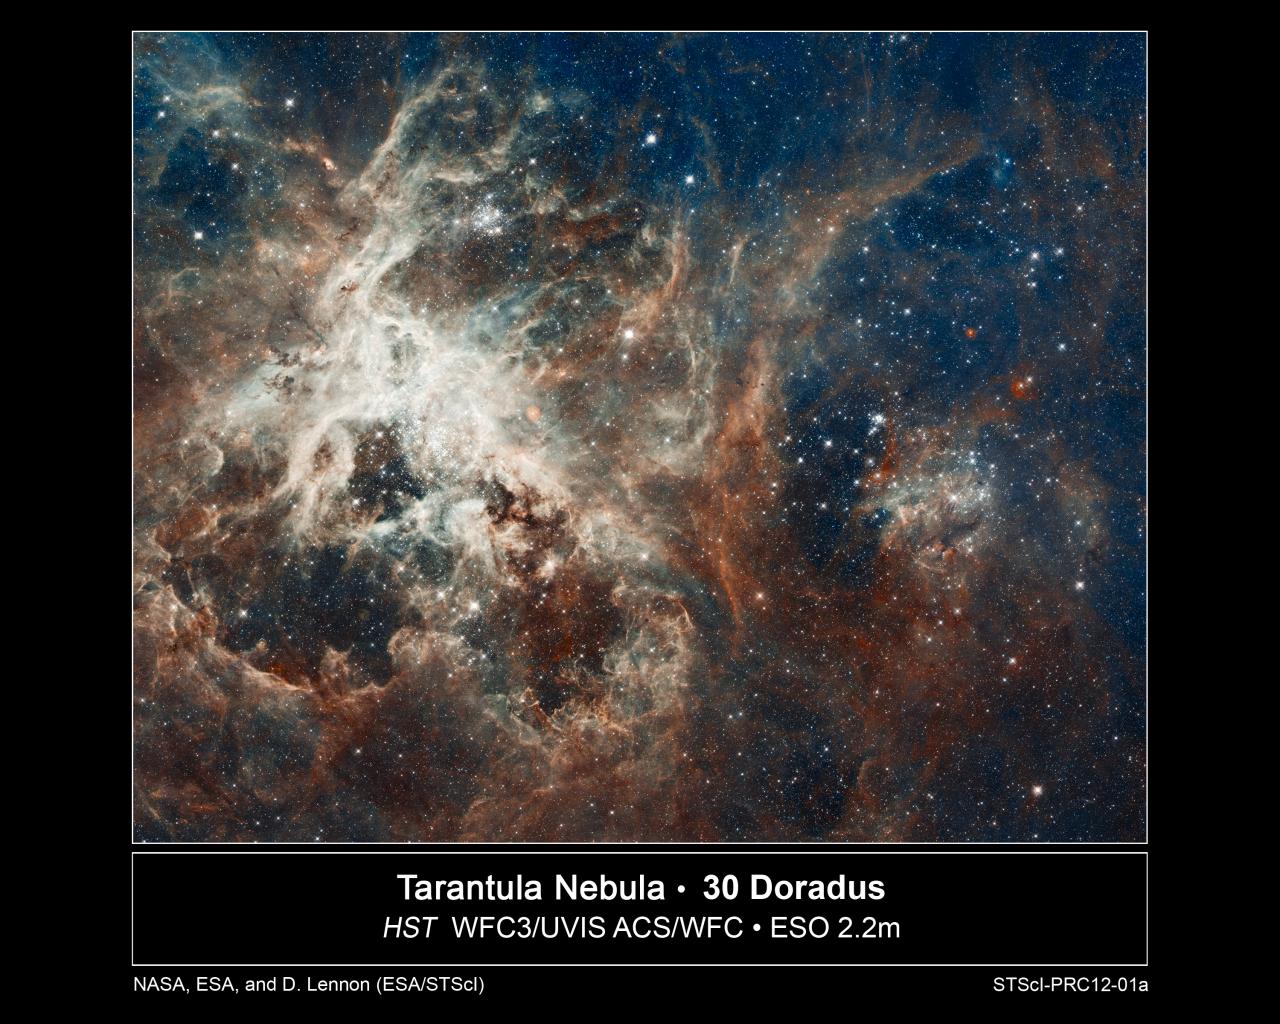 Nebulosa de la T. 30 Doradus. NASA, ESA, D. Lennon and E. Sabbi (ESA/STScI), J. Anderson, S. E. de Mink, R. van der Marel, T. Sohn, and N. Walborn (STScI), N. Bastian (Excellence Cluster, Munich), L. Bedin (INAF, Padua), E. Bressert (ESO), P. Crowther.